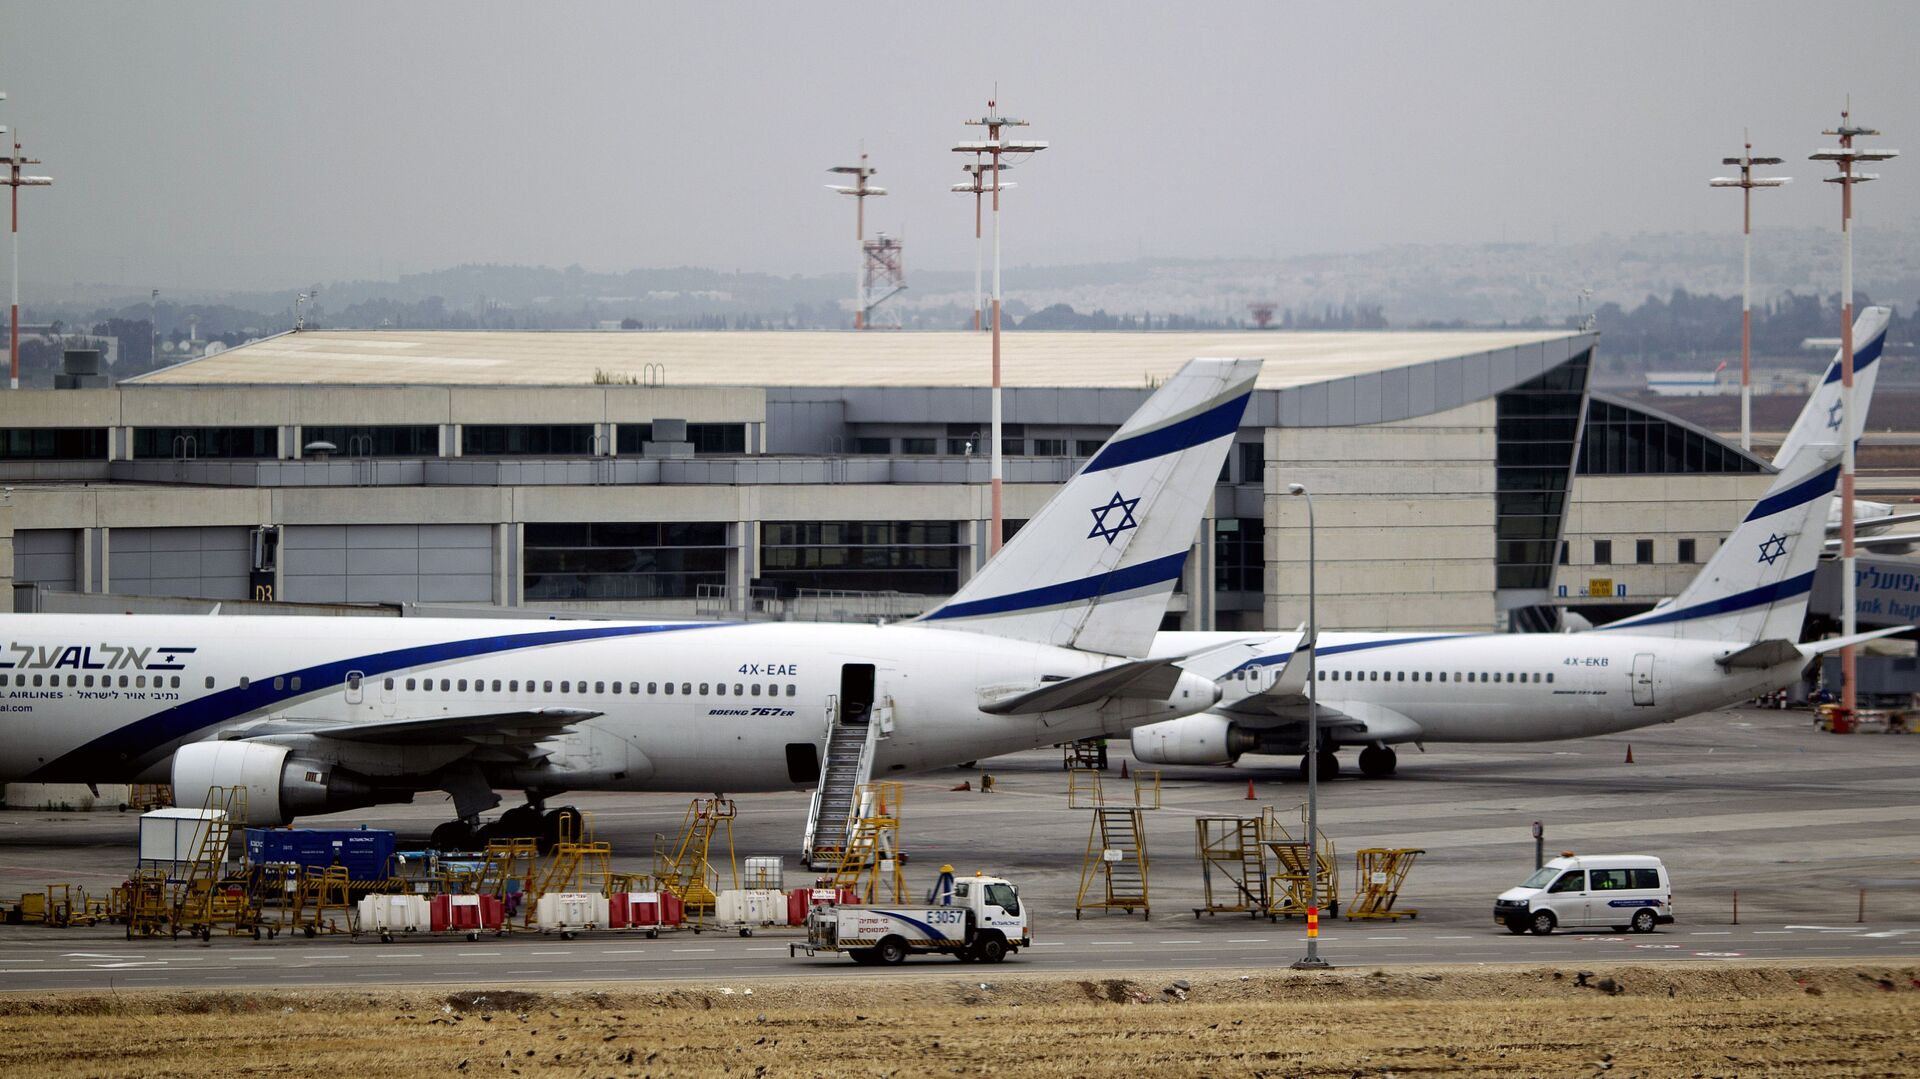 مطار بن غوريون الدولي في تل أبيب، إسرائيل 21 أبريل/ نيسان 2013 - سبوتنيك عربي, 1920, 27.11.2021